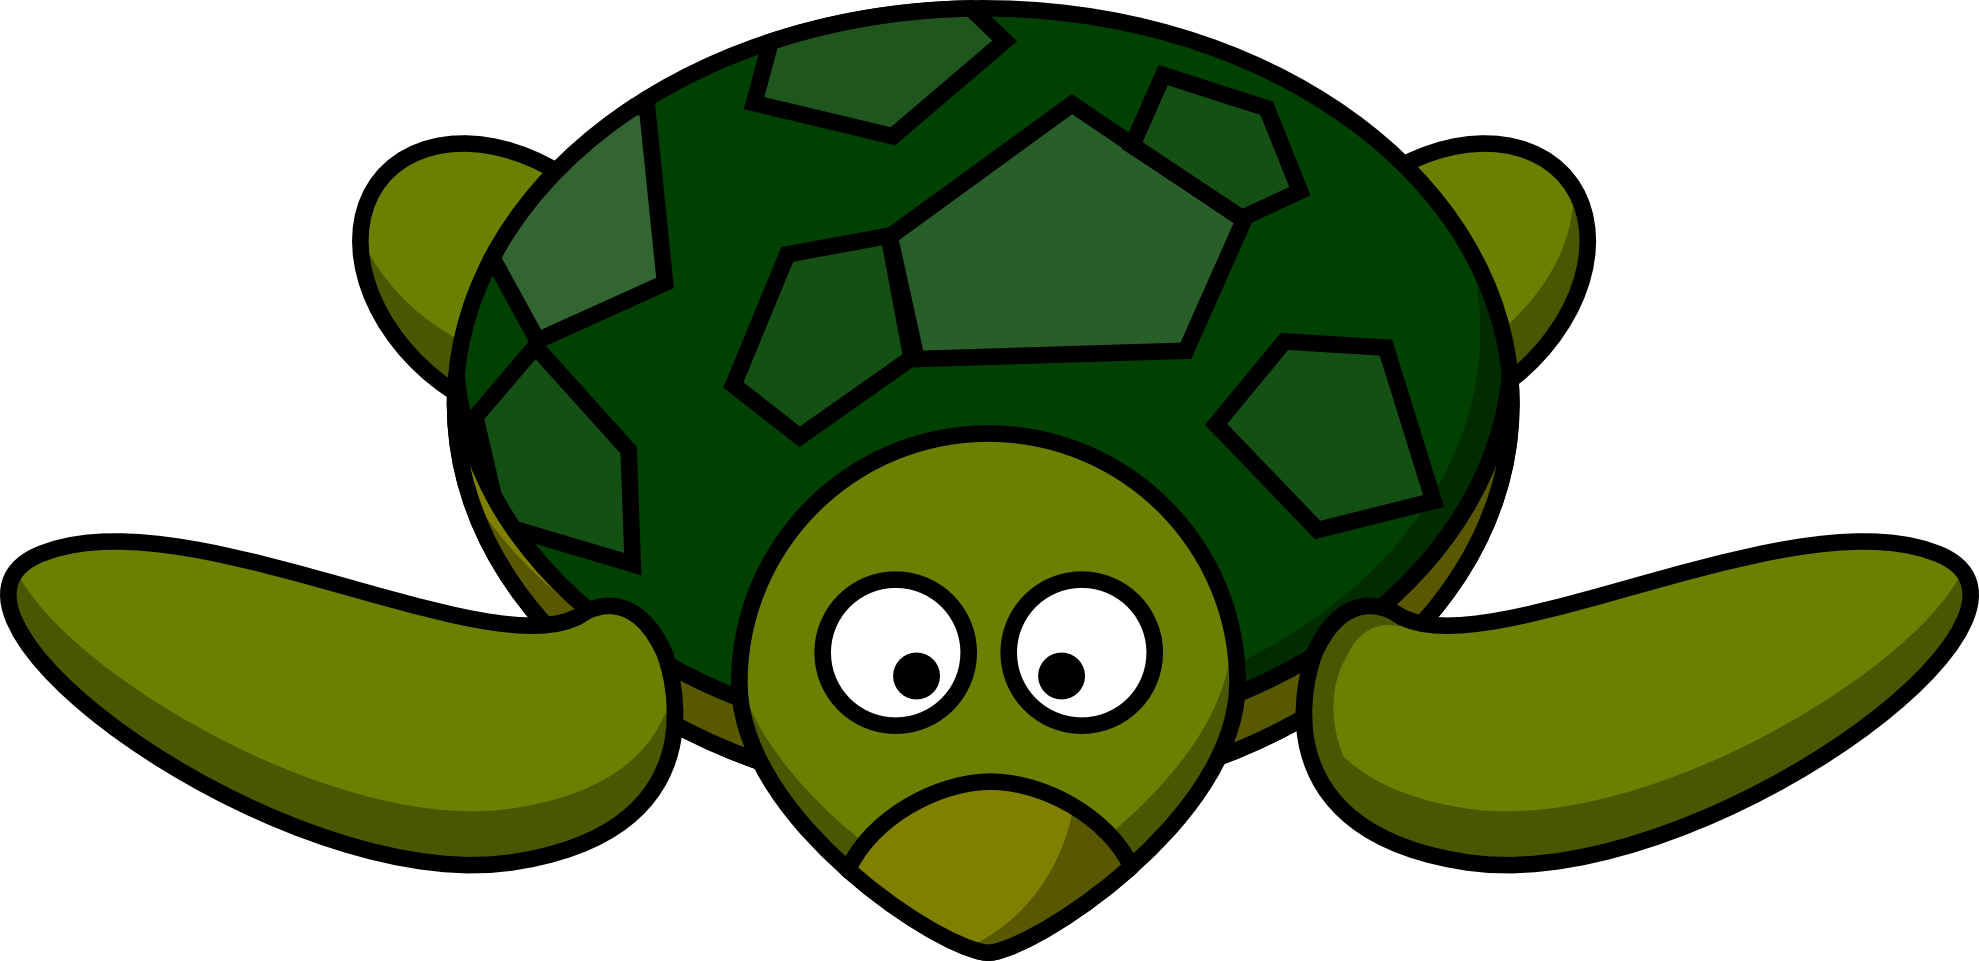 Turtle clip art free. Face clipart tortoise